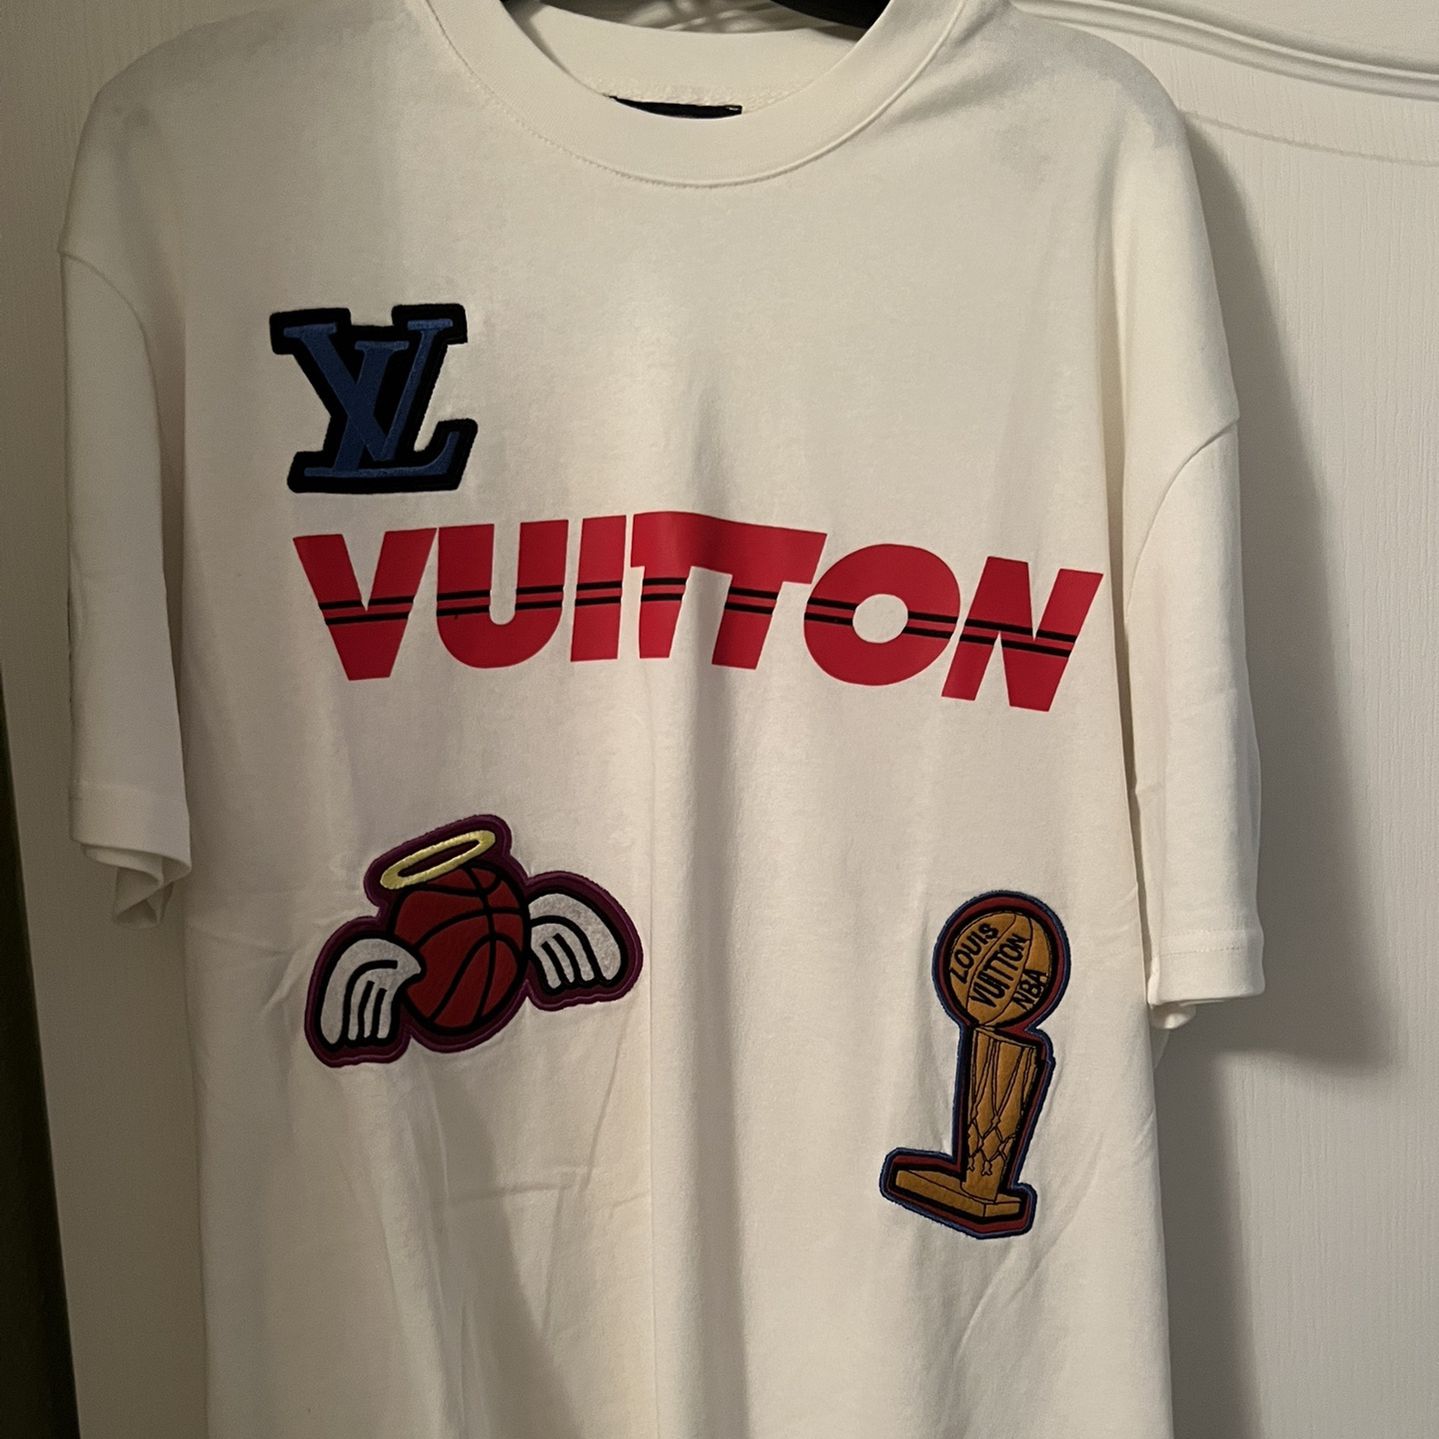 Men's Louis Vuitton T-shirt NBA, in Glasgow